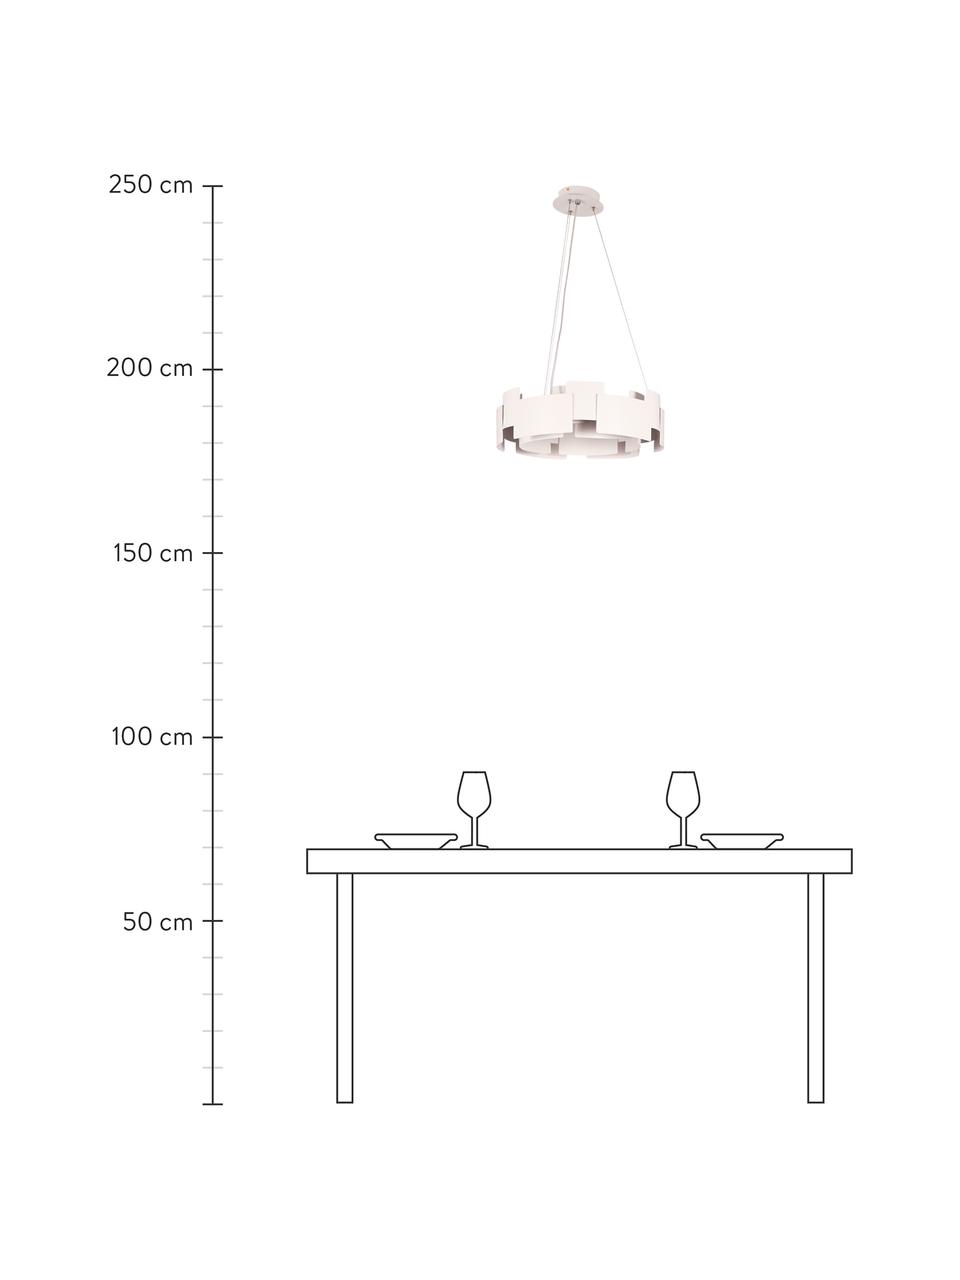 Moderne LED hanglamp Torino in wit, Lampenkap: acryl, gecoat metaal, Baldakijn: gecoat metaal, Wit, transparant, Ø 46 x H 50 cm